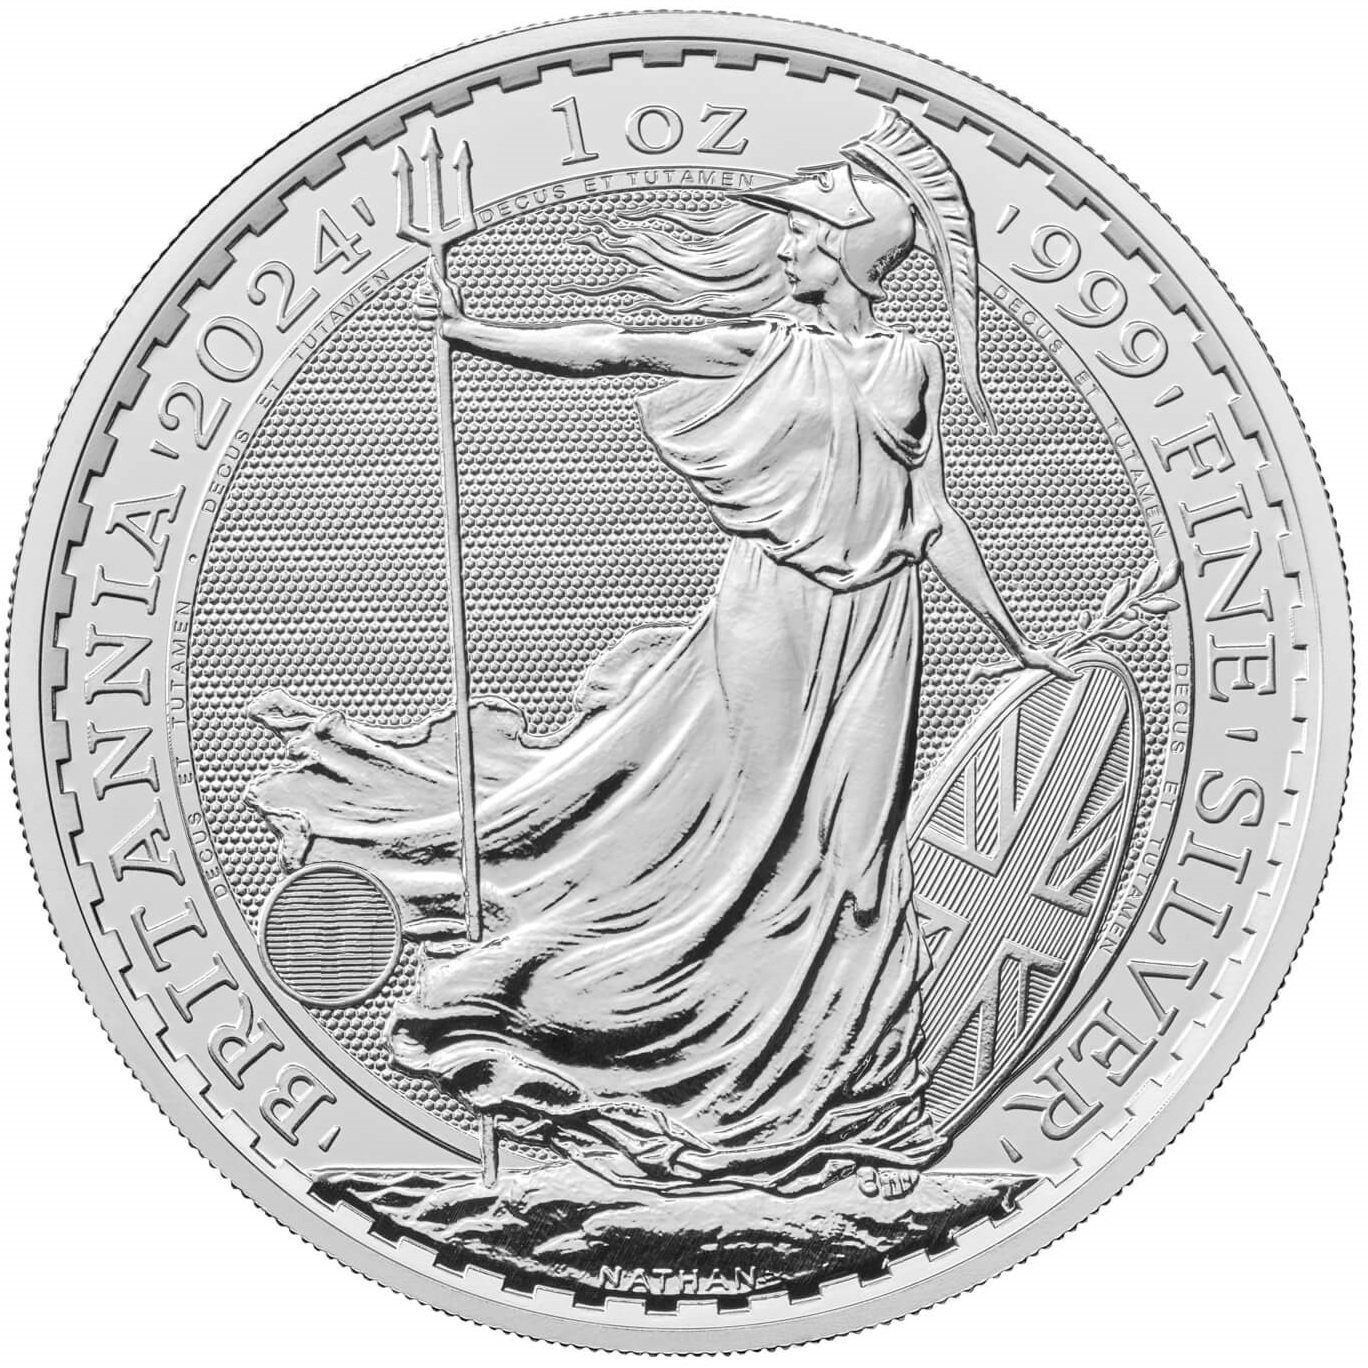 2024 1 oz. Silver Britannia bullion coin - reverse side